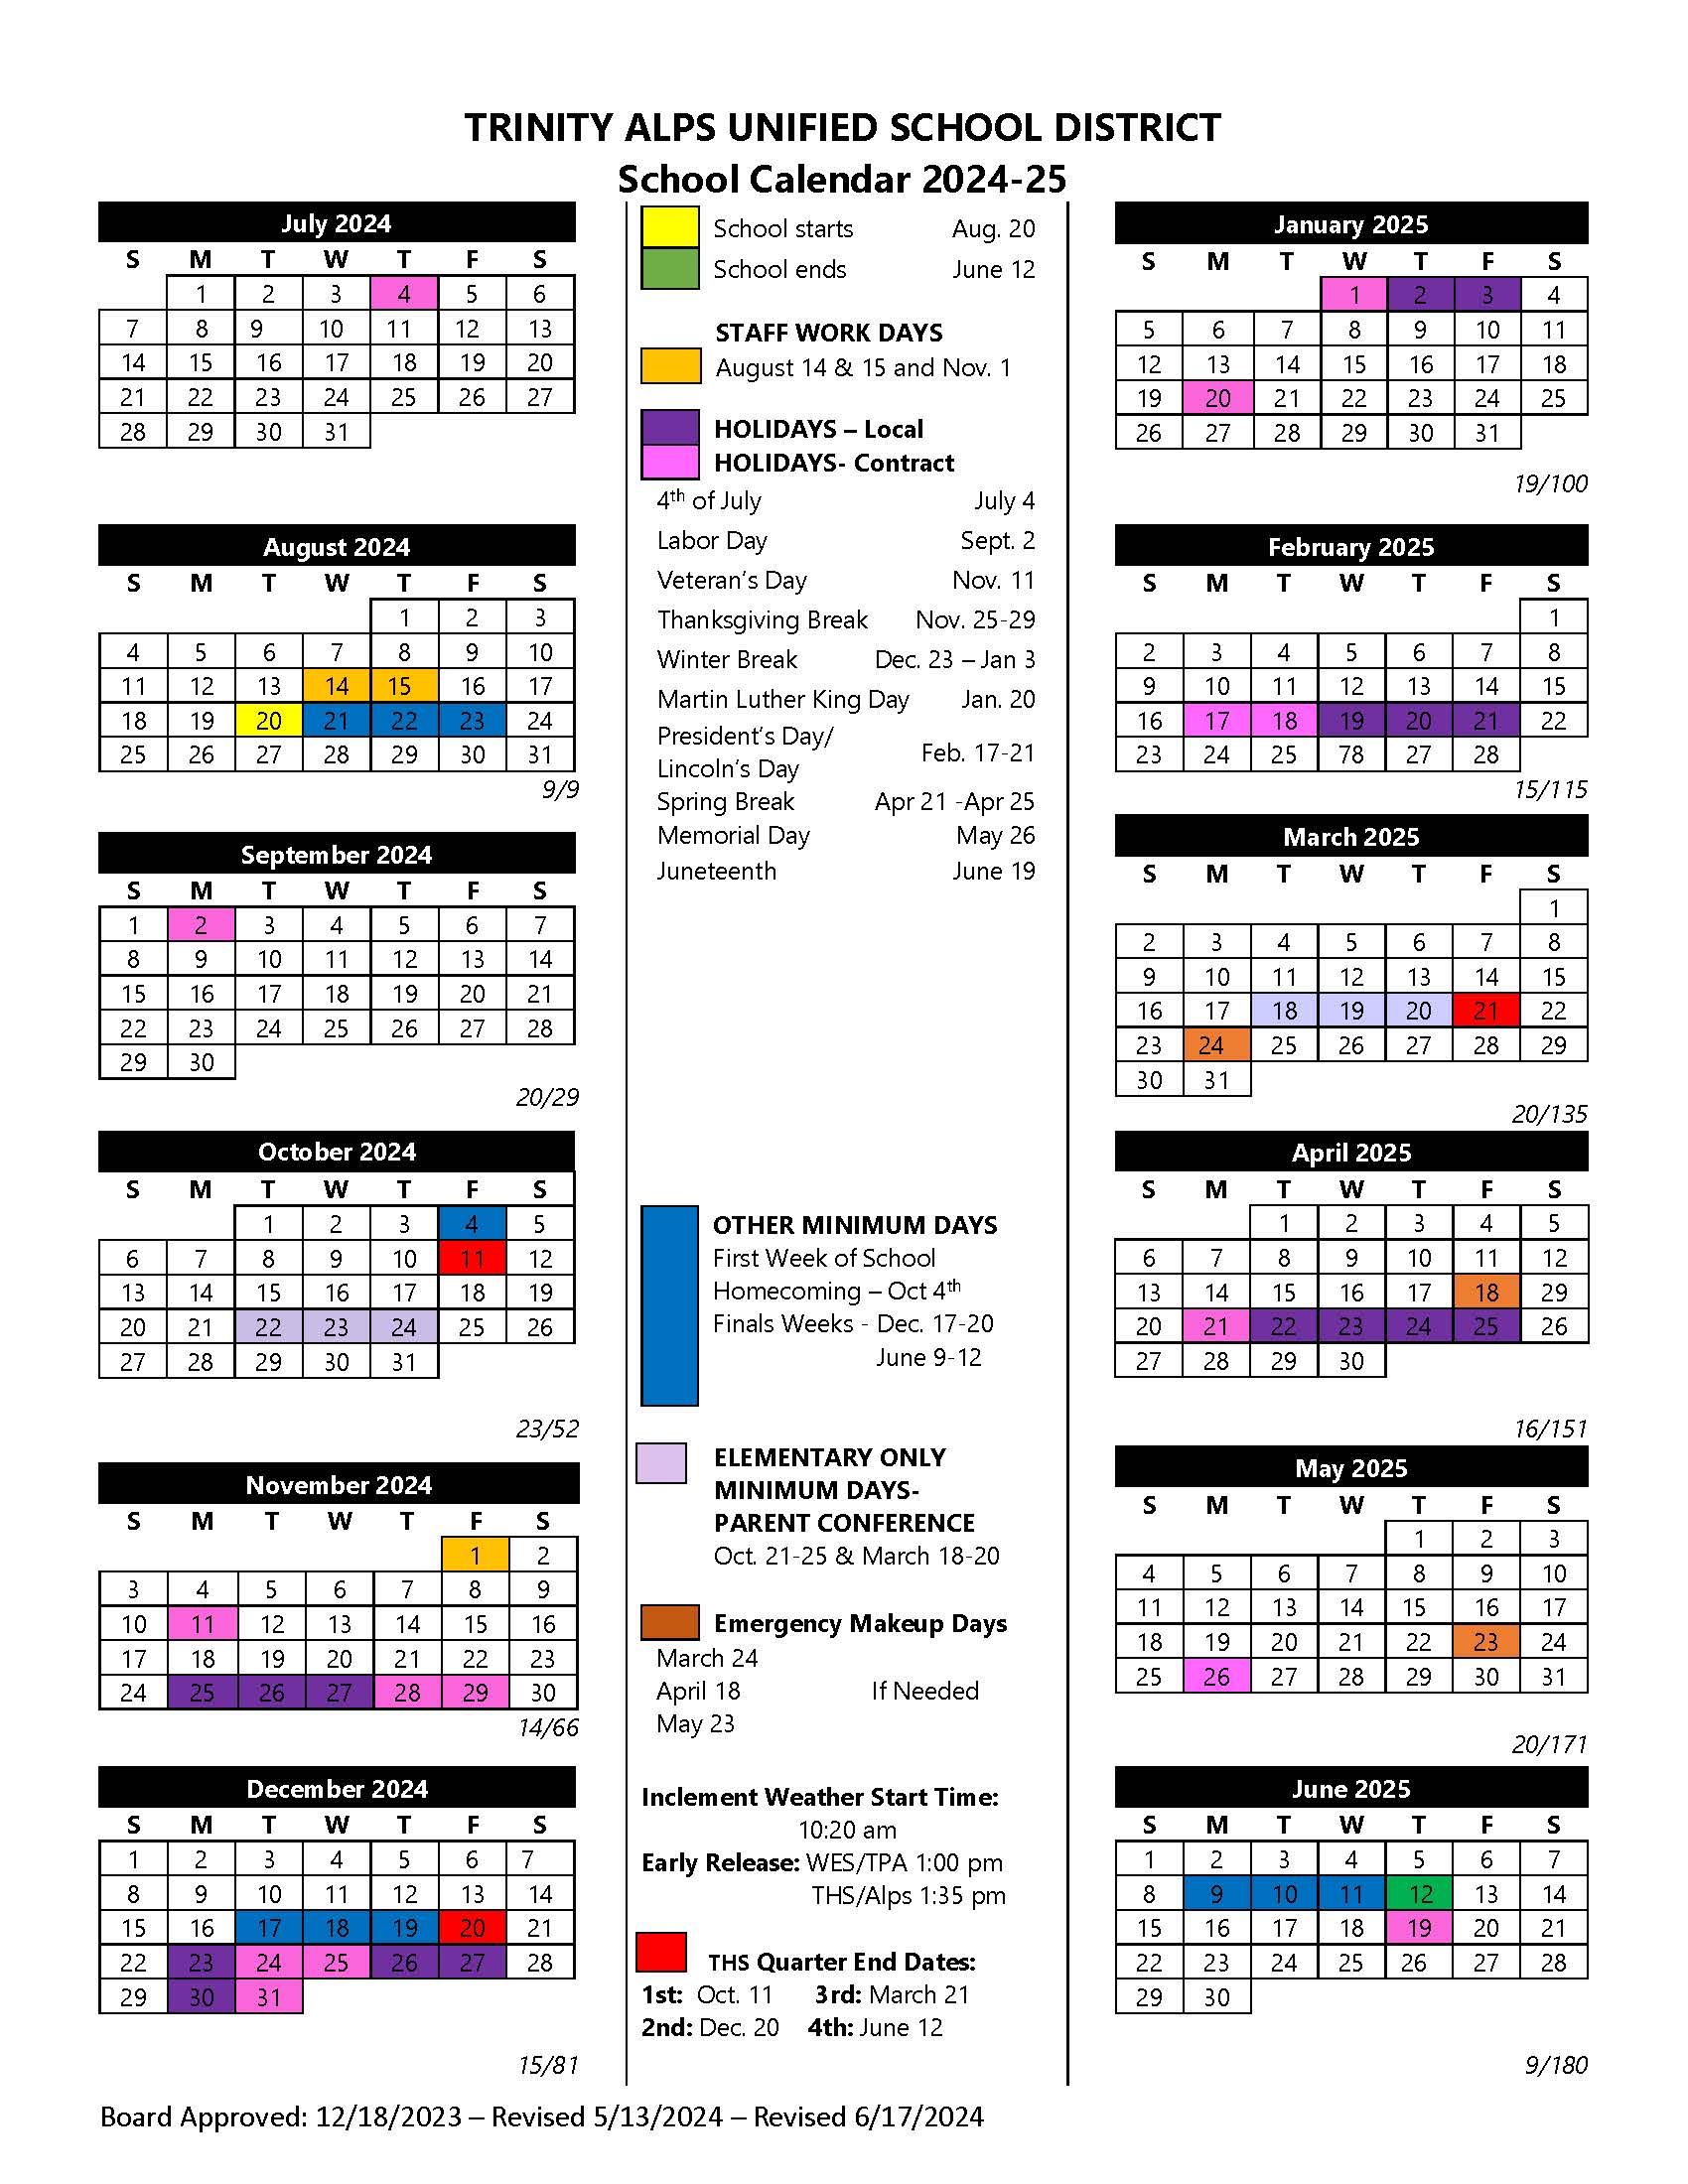 image of 24-25 tausd calendar